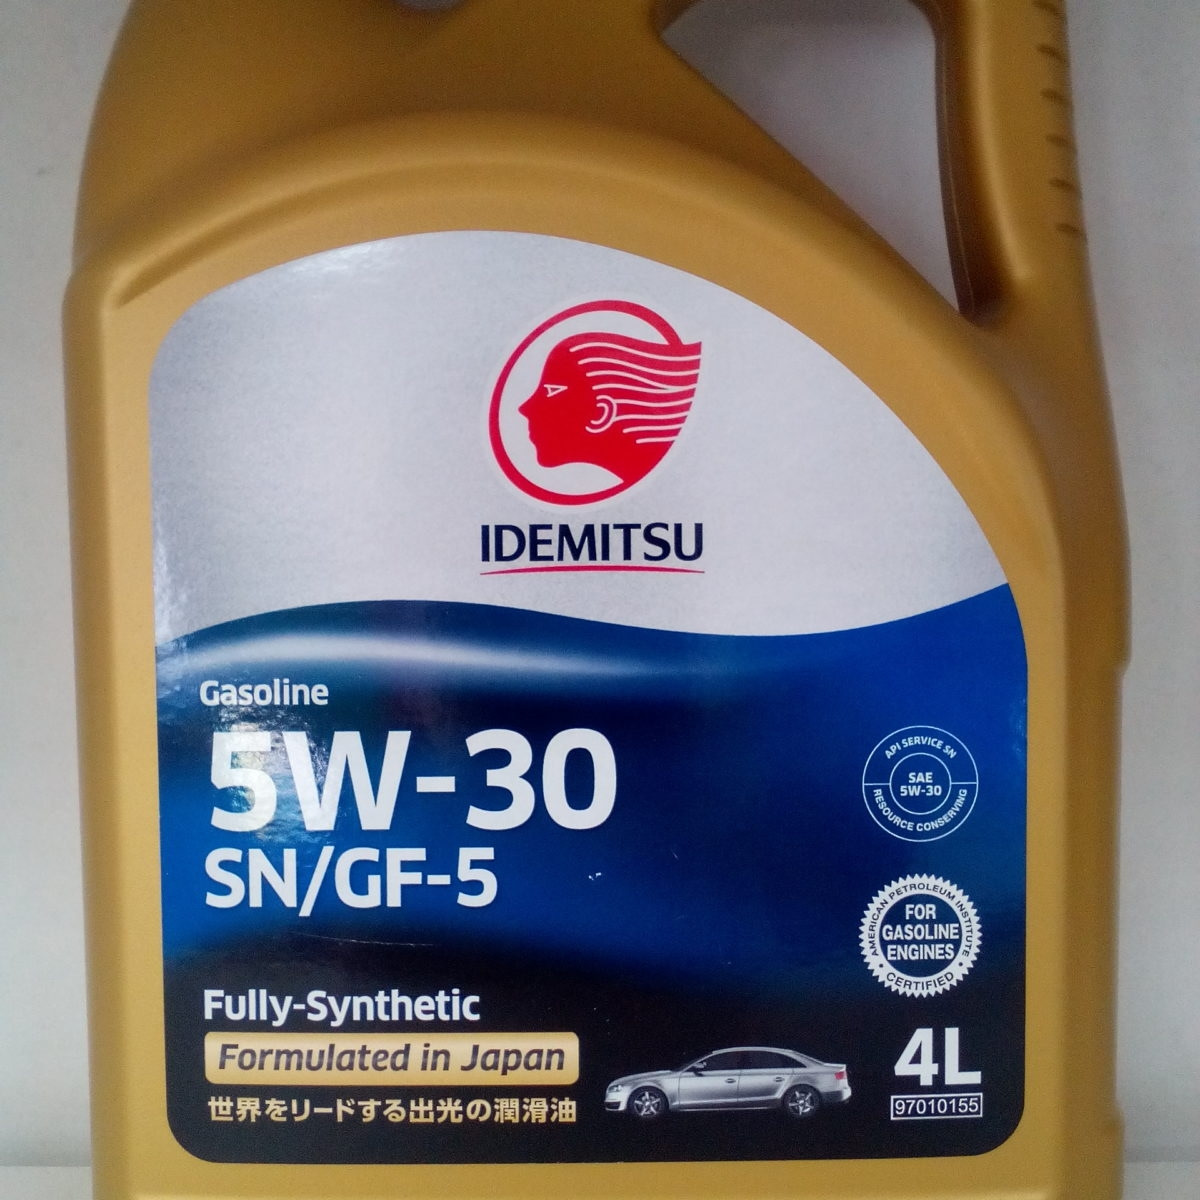 Купить моторное идемитсу 5w30. Idemitsu 5w30 SN/gf fully Synthetic. Idemitsu fully-Synthetic SN/gf-5. Idemitsu SN 5w-30 fully-Synthetic. Idemitsu 5w30 a5/b5.